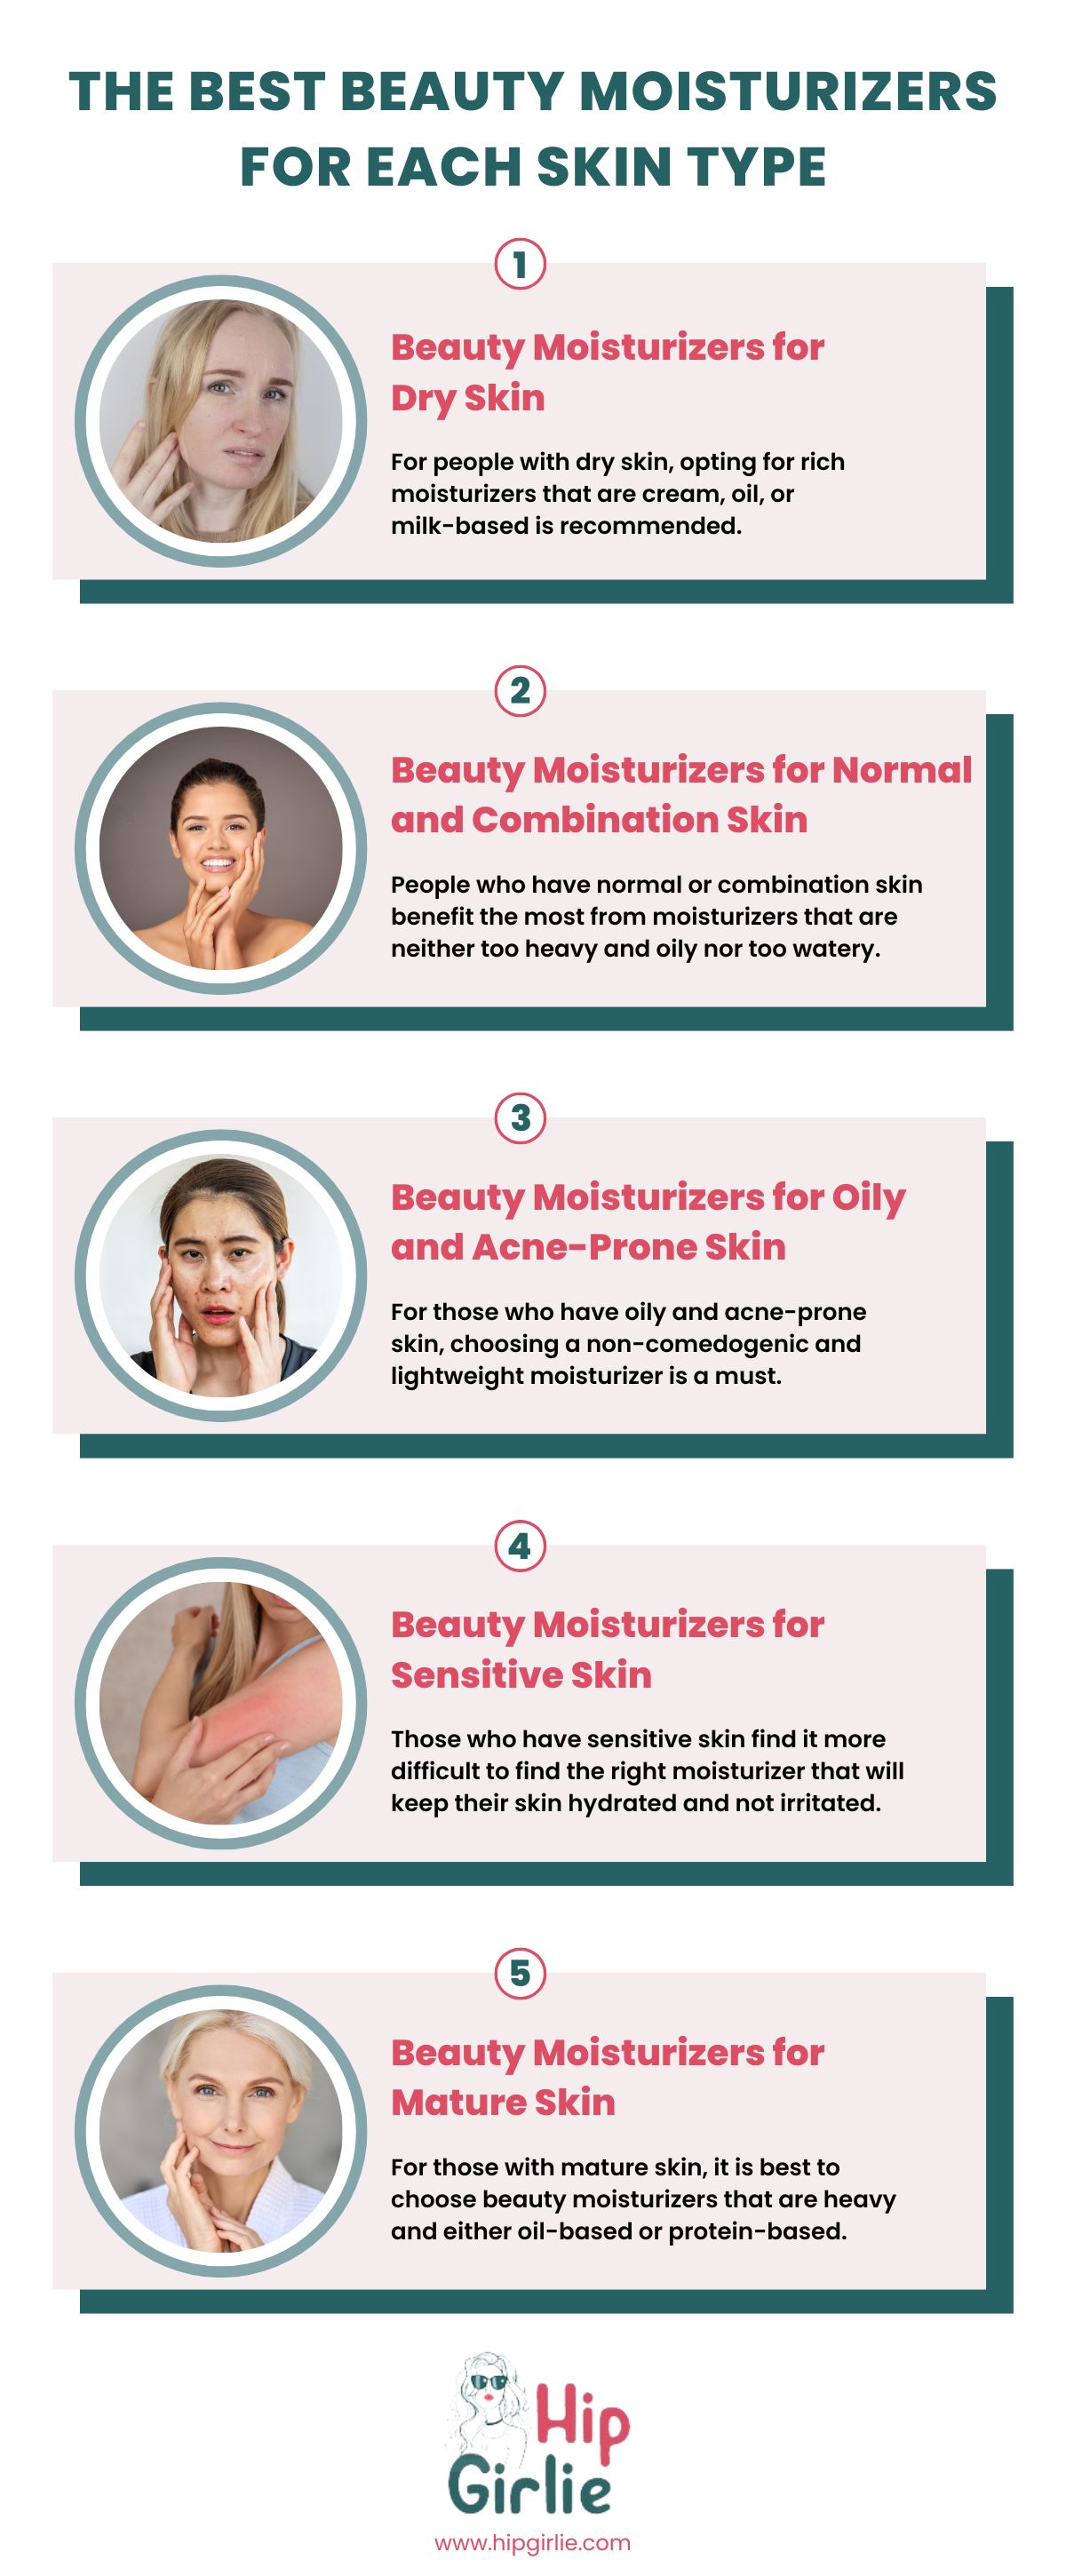 The Best Beauty Moisturizers for Each Skin Type